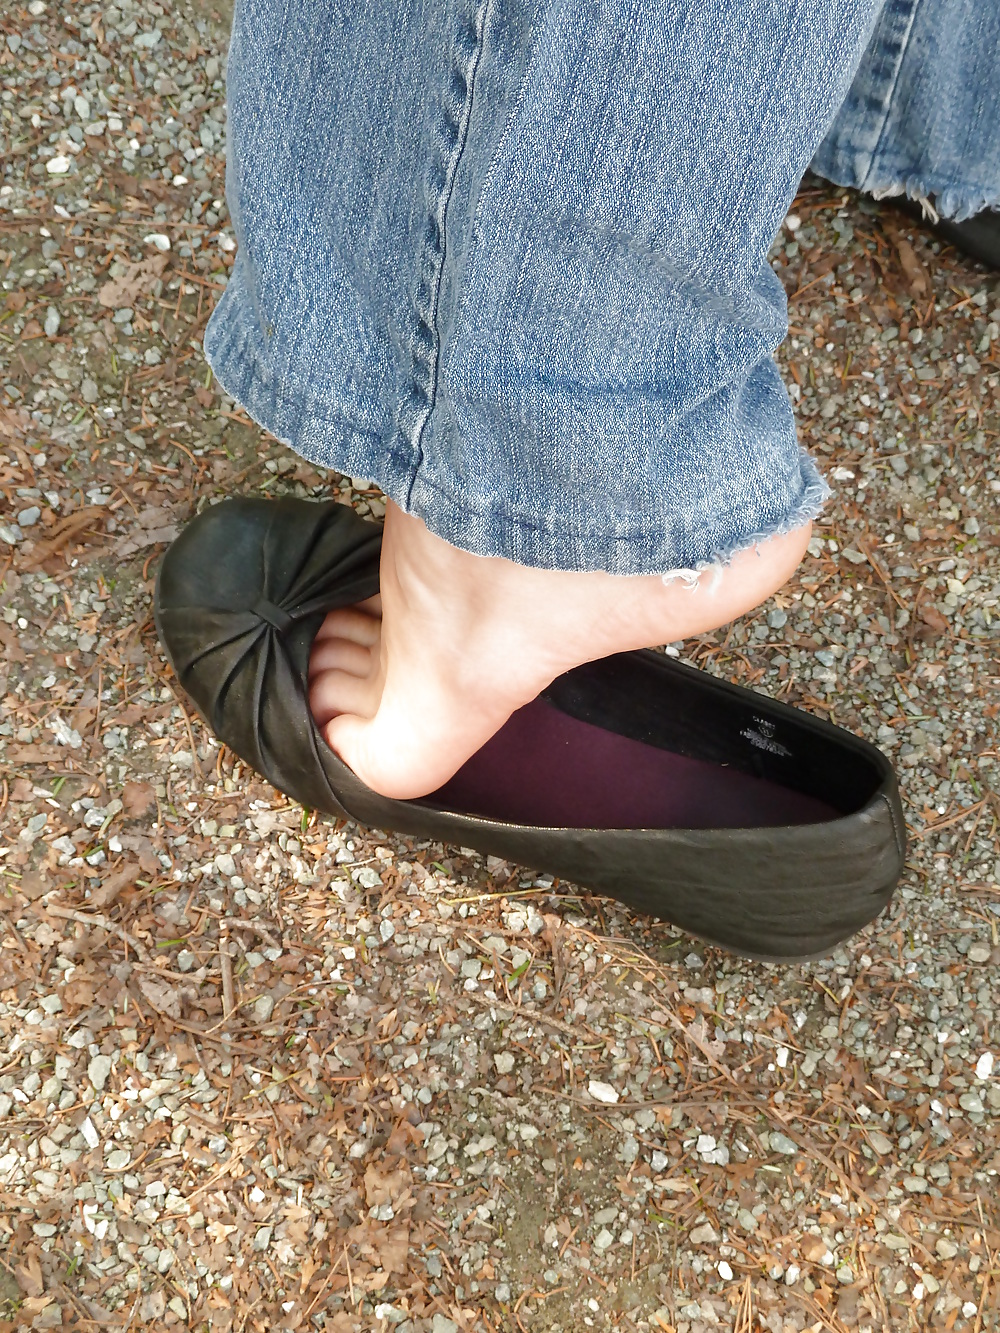 outdoor feet adult photos